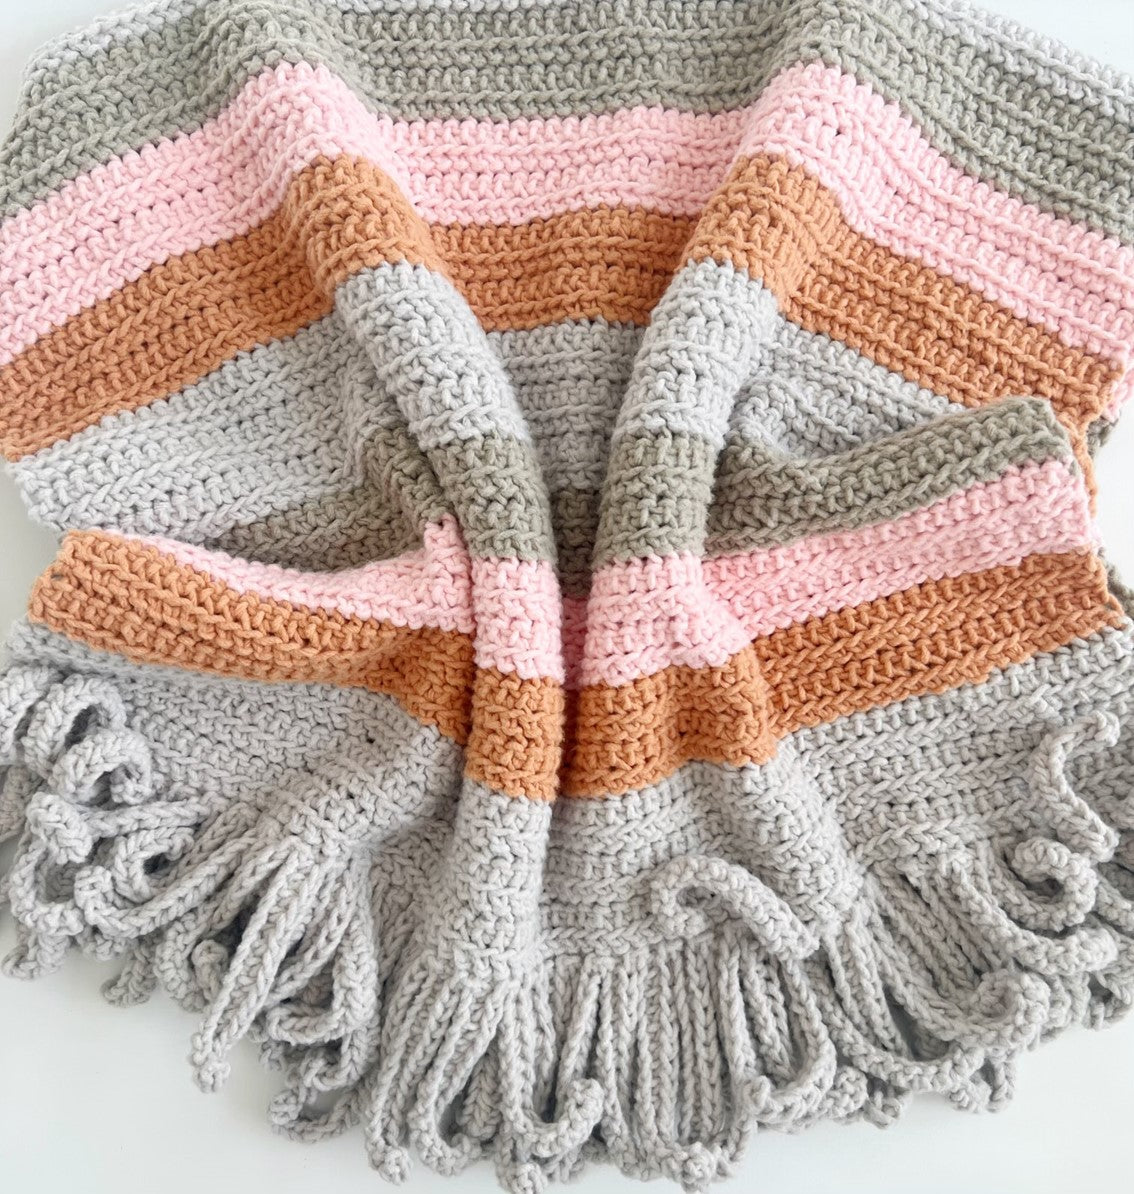 Beginner Crochet Project with Yarnspirations - Daisy Farm Crafts